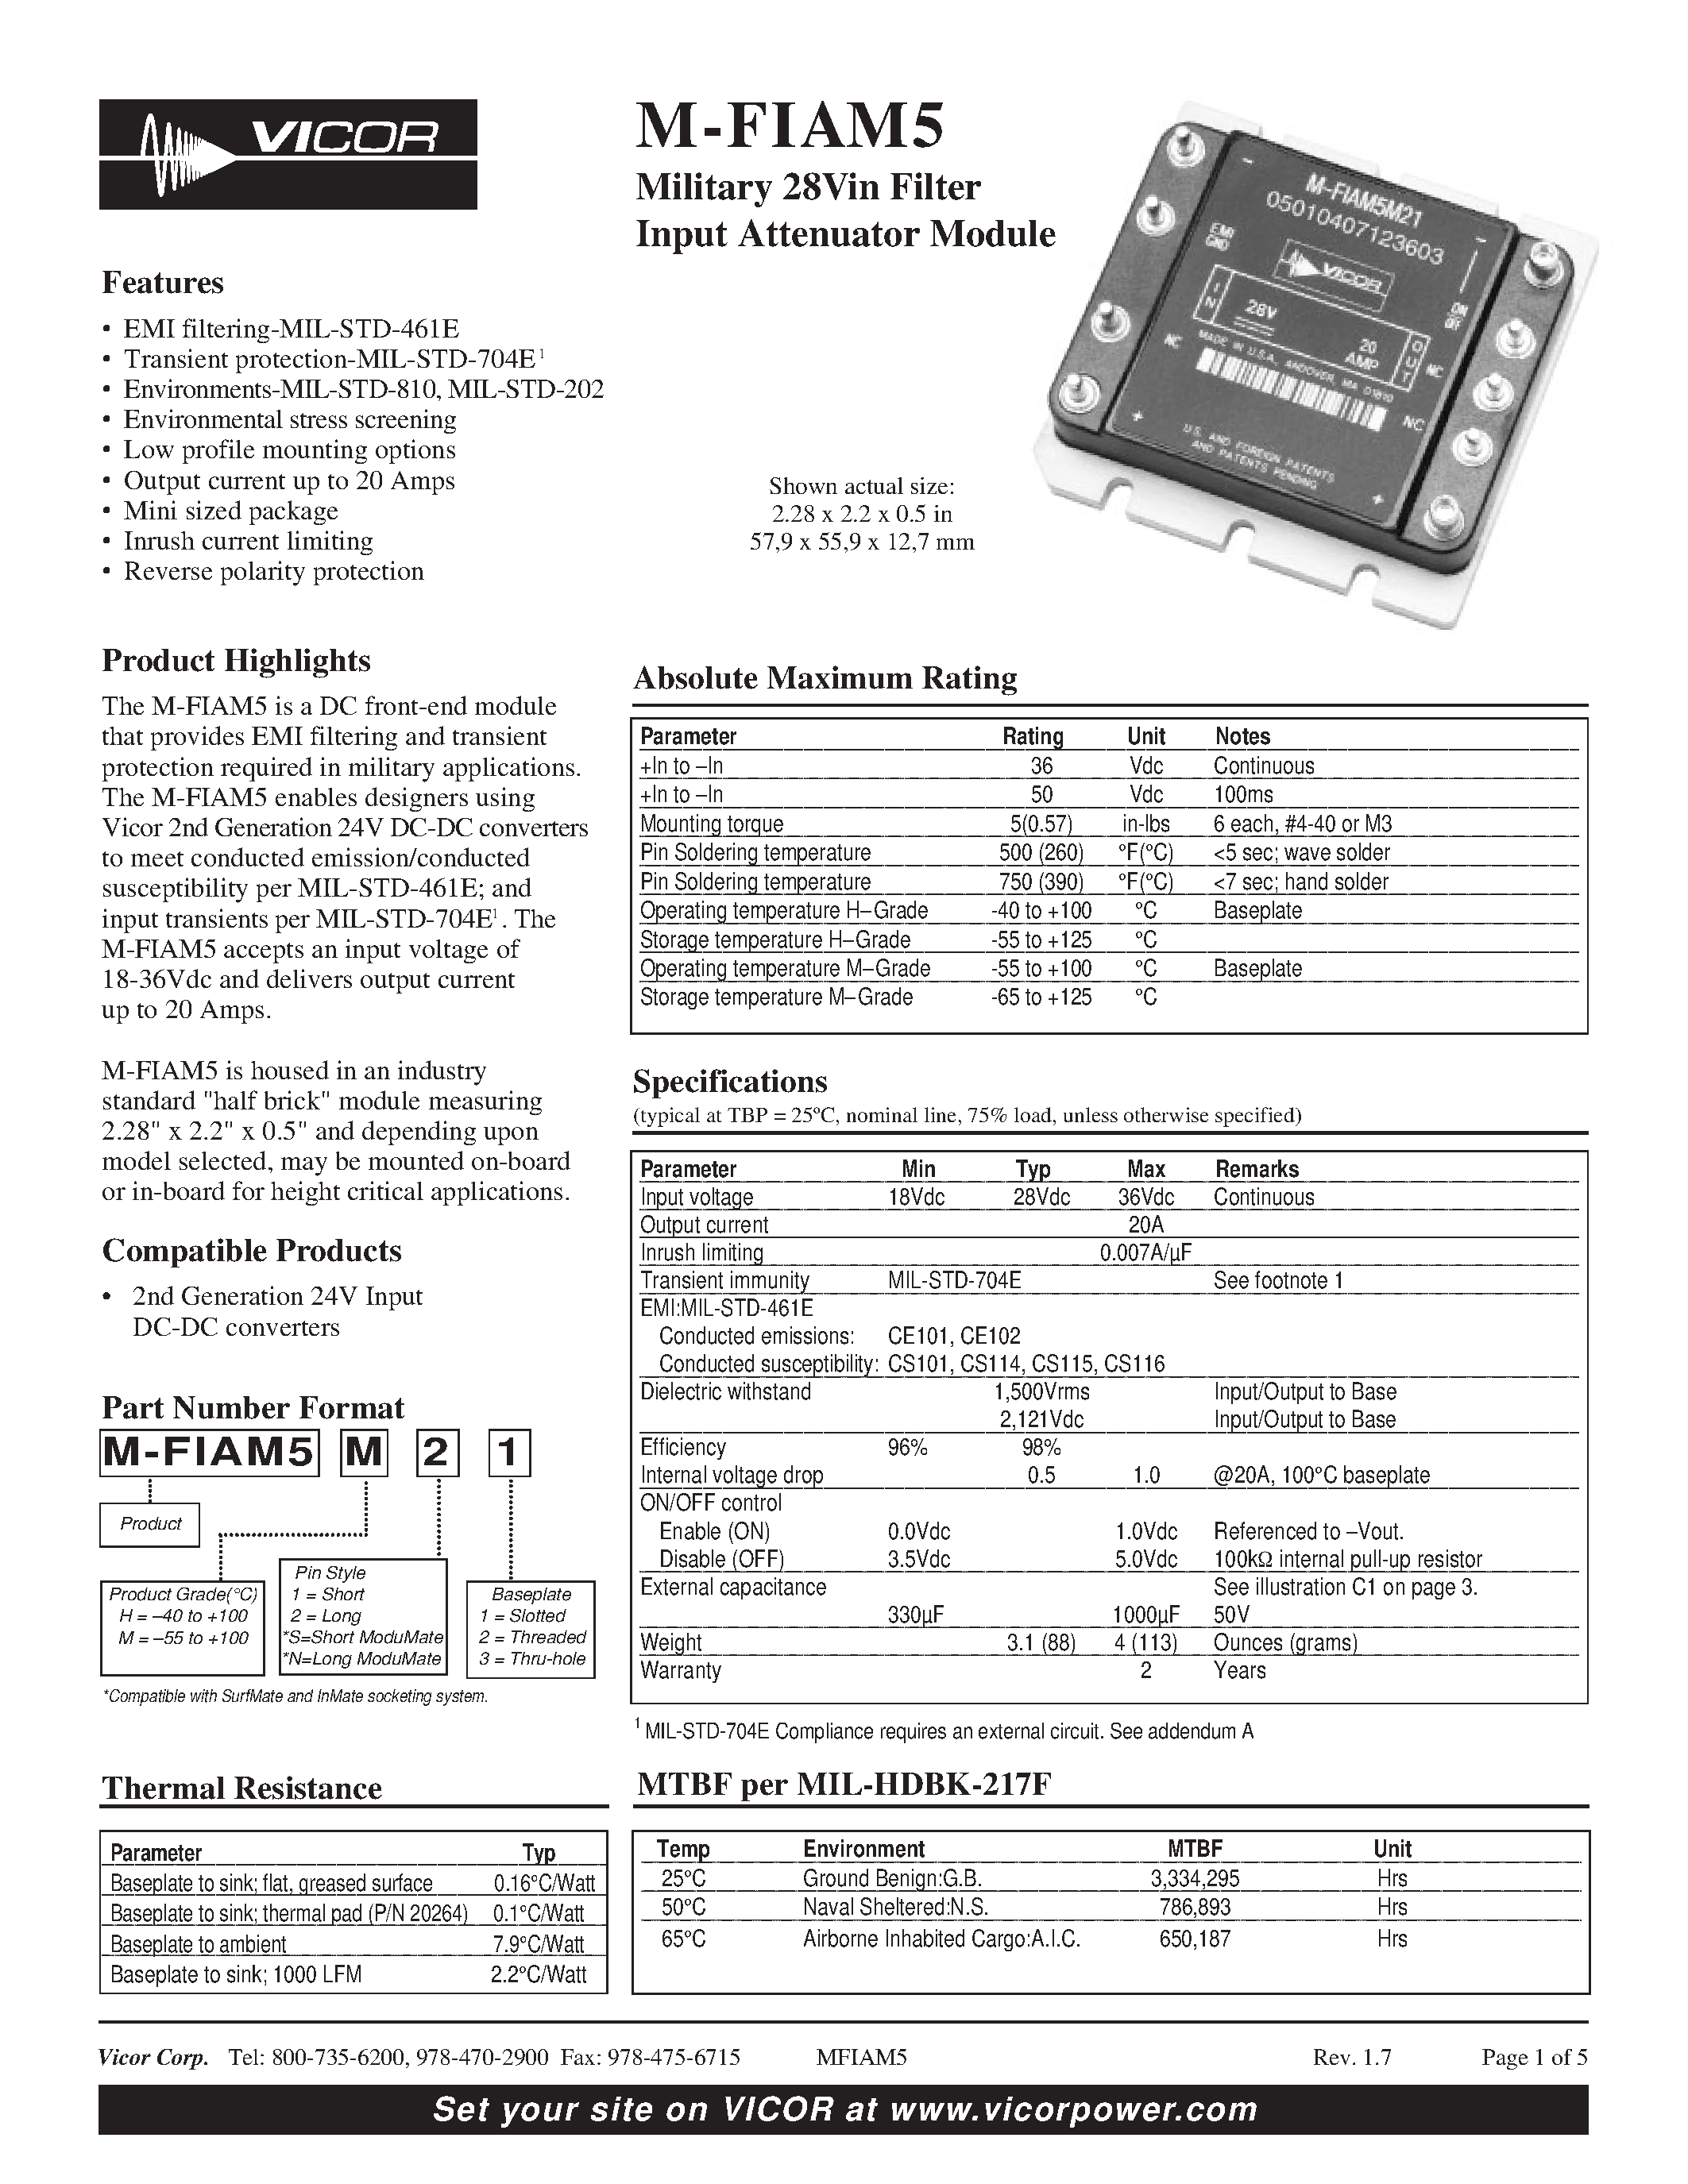 Даташит M-FIAM5M22 - Military 28Vin Filter Input Attenuator Module страница 1